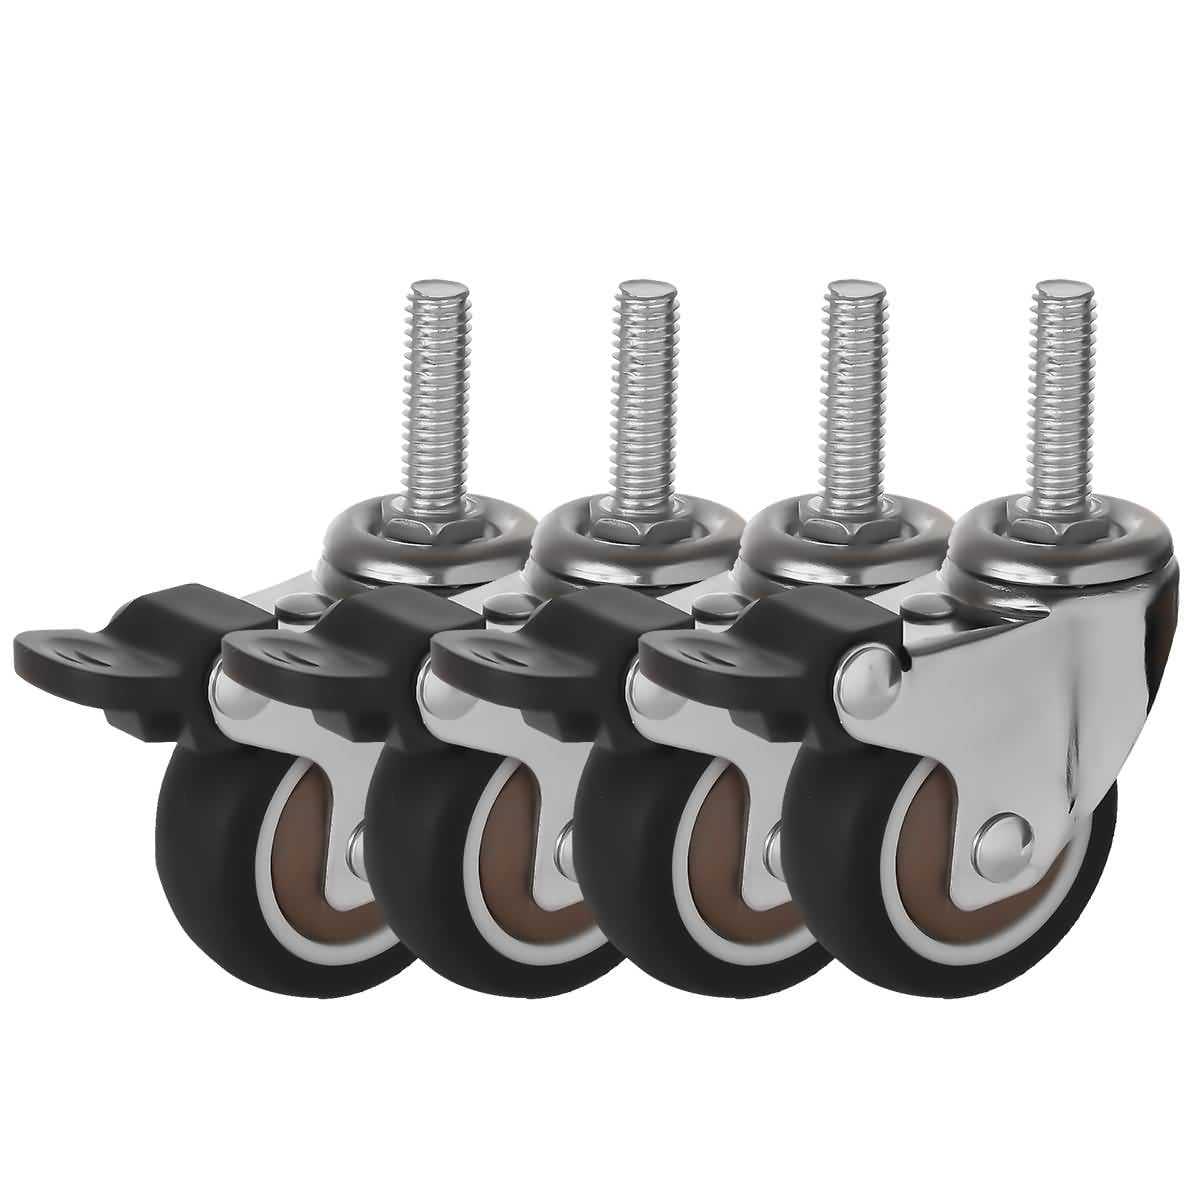 Swivel Caster Wheels Brake Locking Locks,Screwed Bolt 5/16 x 1/2 4-Pack Castor Stem_8x12 1.5 Inch Stem Casters with Brake